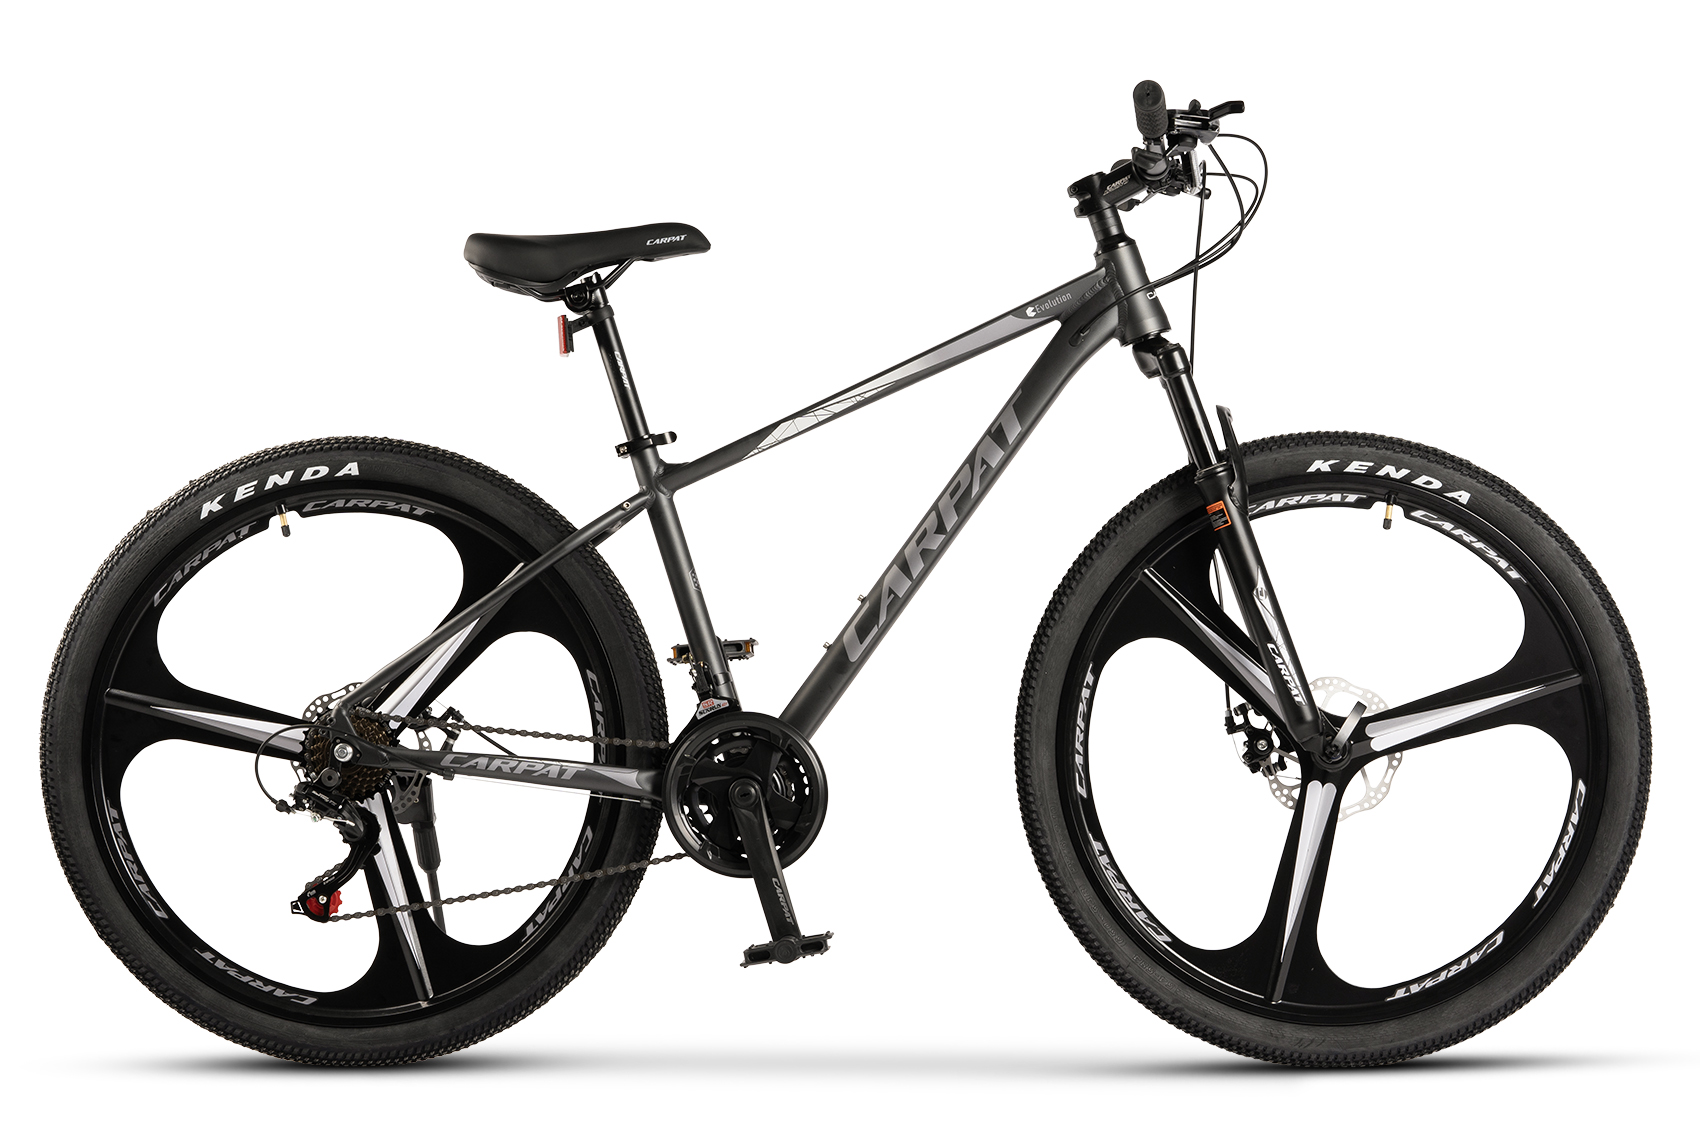 BICICLETE DE MUNTE - Bicicleta MTB Carpat Evolution C27313M 27.5", Gri/Argintiu, https:carpatsport.ro